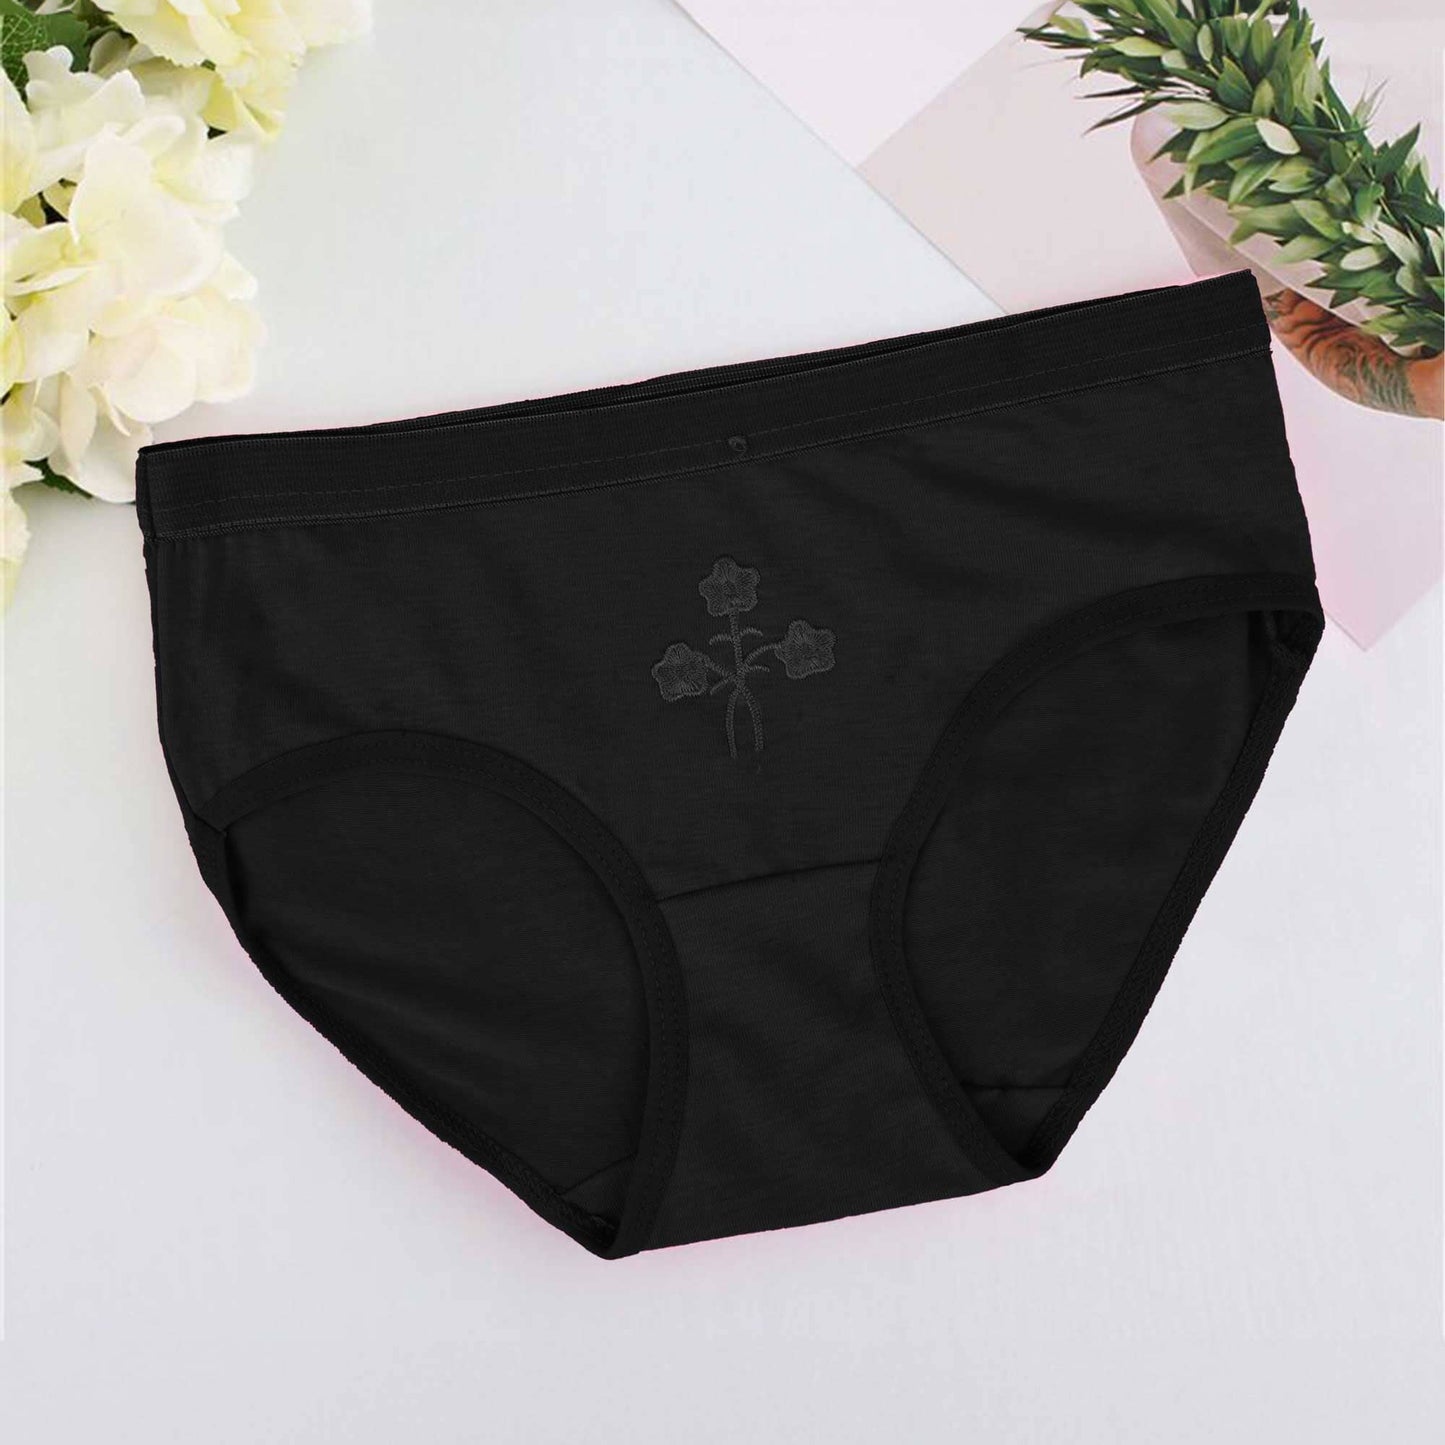 LZD Girl's/Women's Underwear Panties Women's Lingerie SRL Black Waist-26-28 